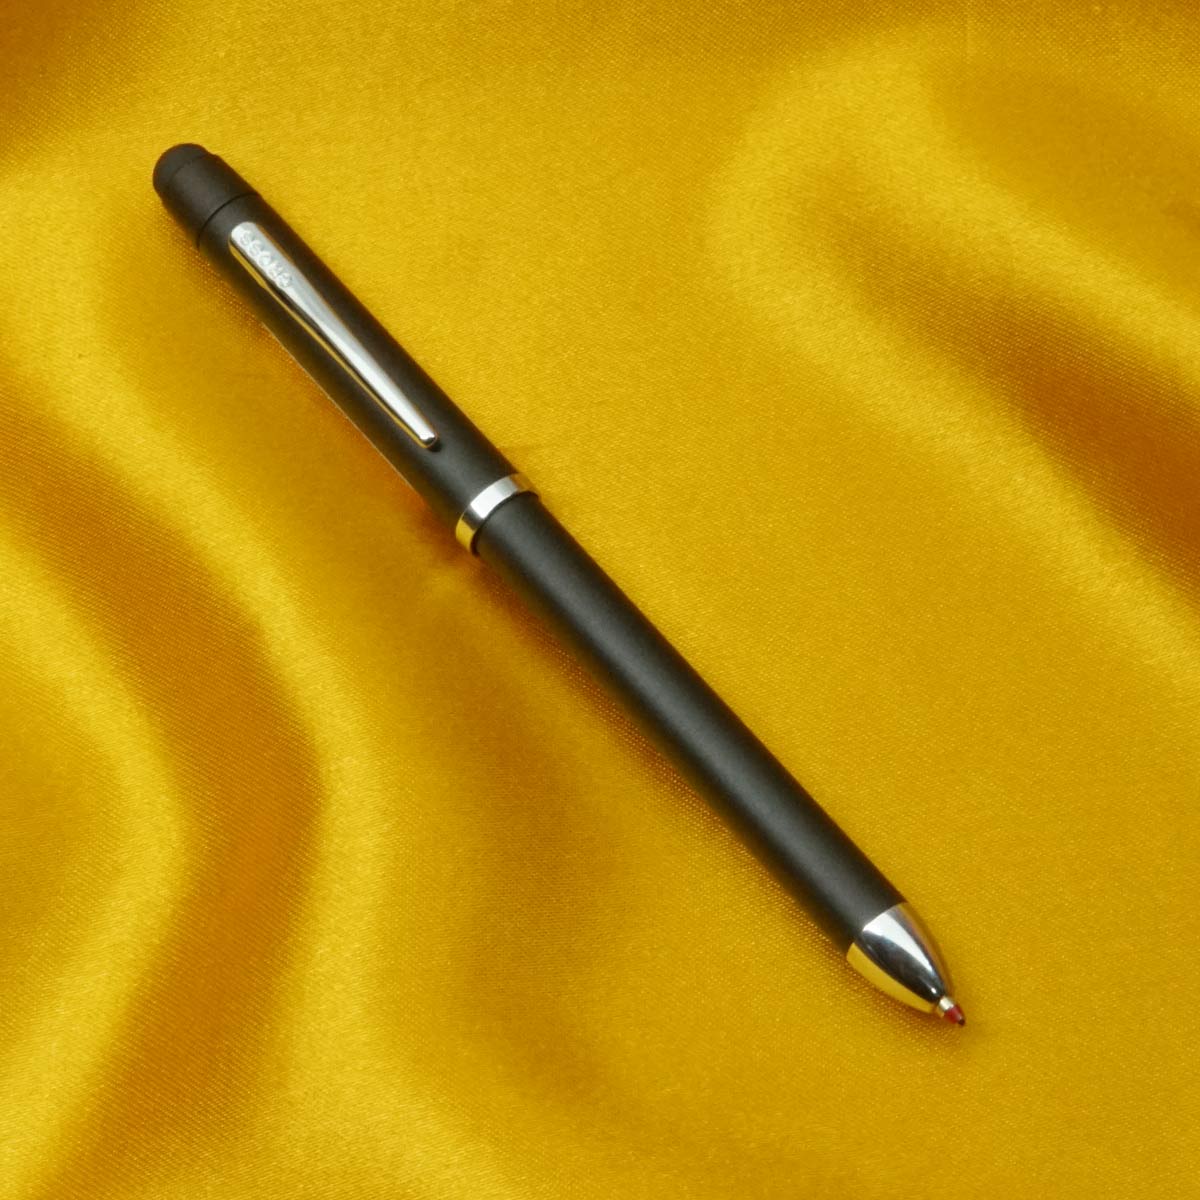 Cross Tech 3 Classic Black Color Body Multifunction Pen With Silver Clip Twist Type Ball Pen SKU 20534